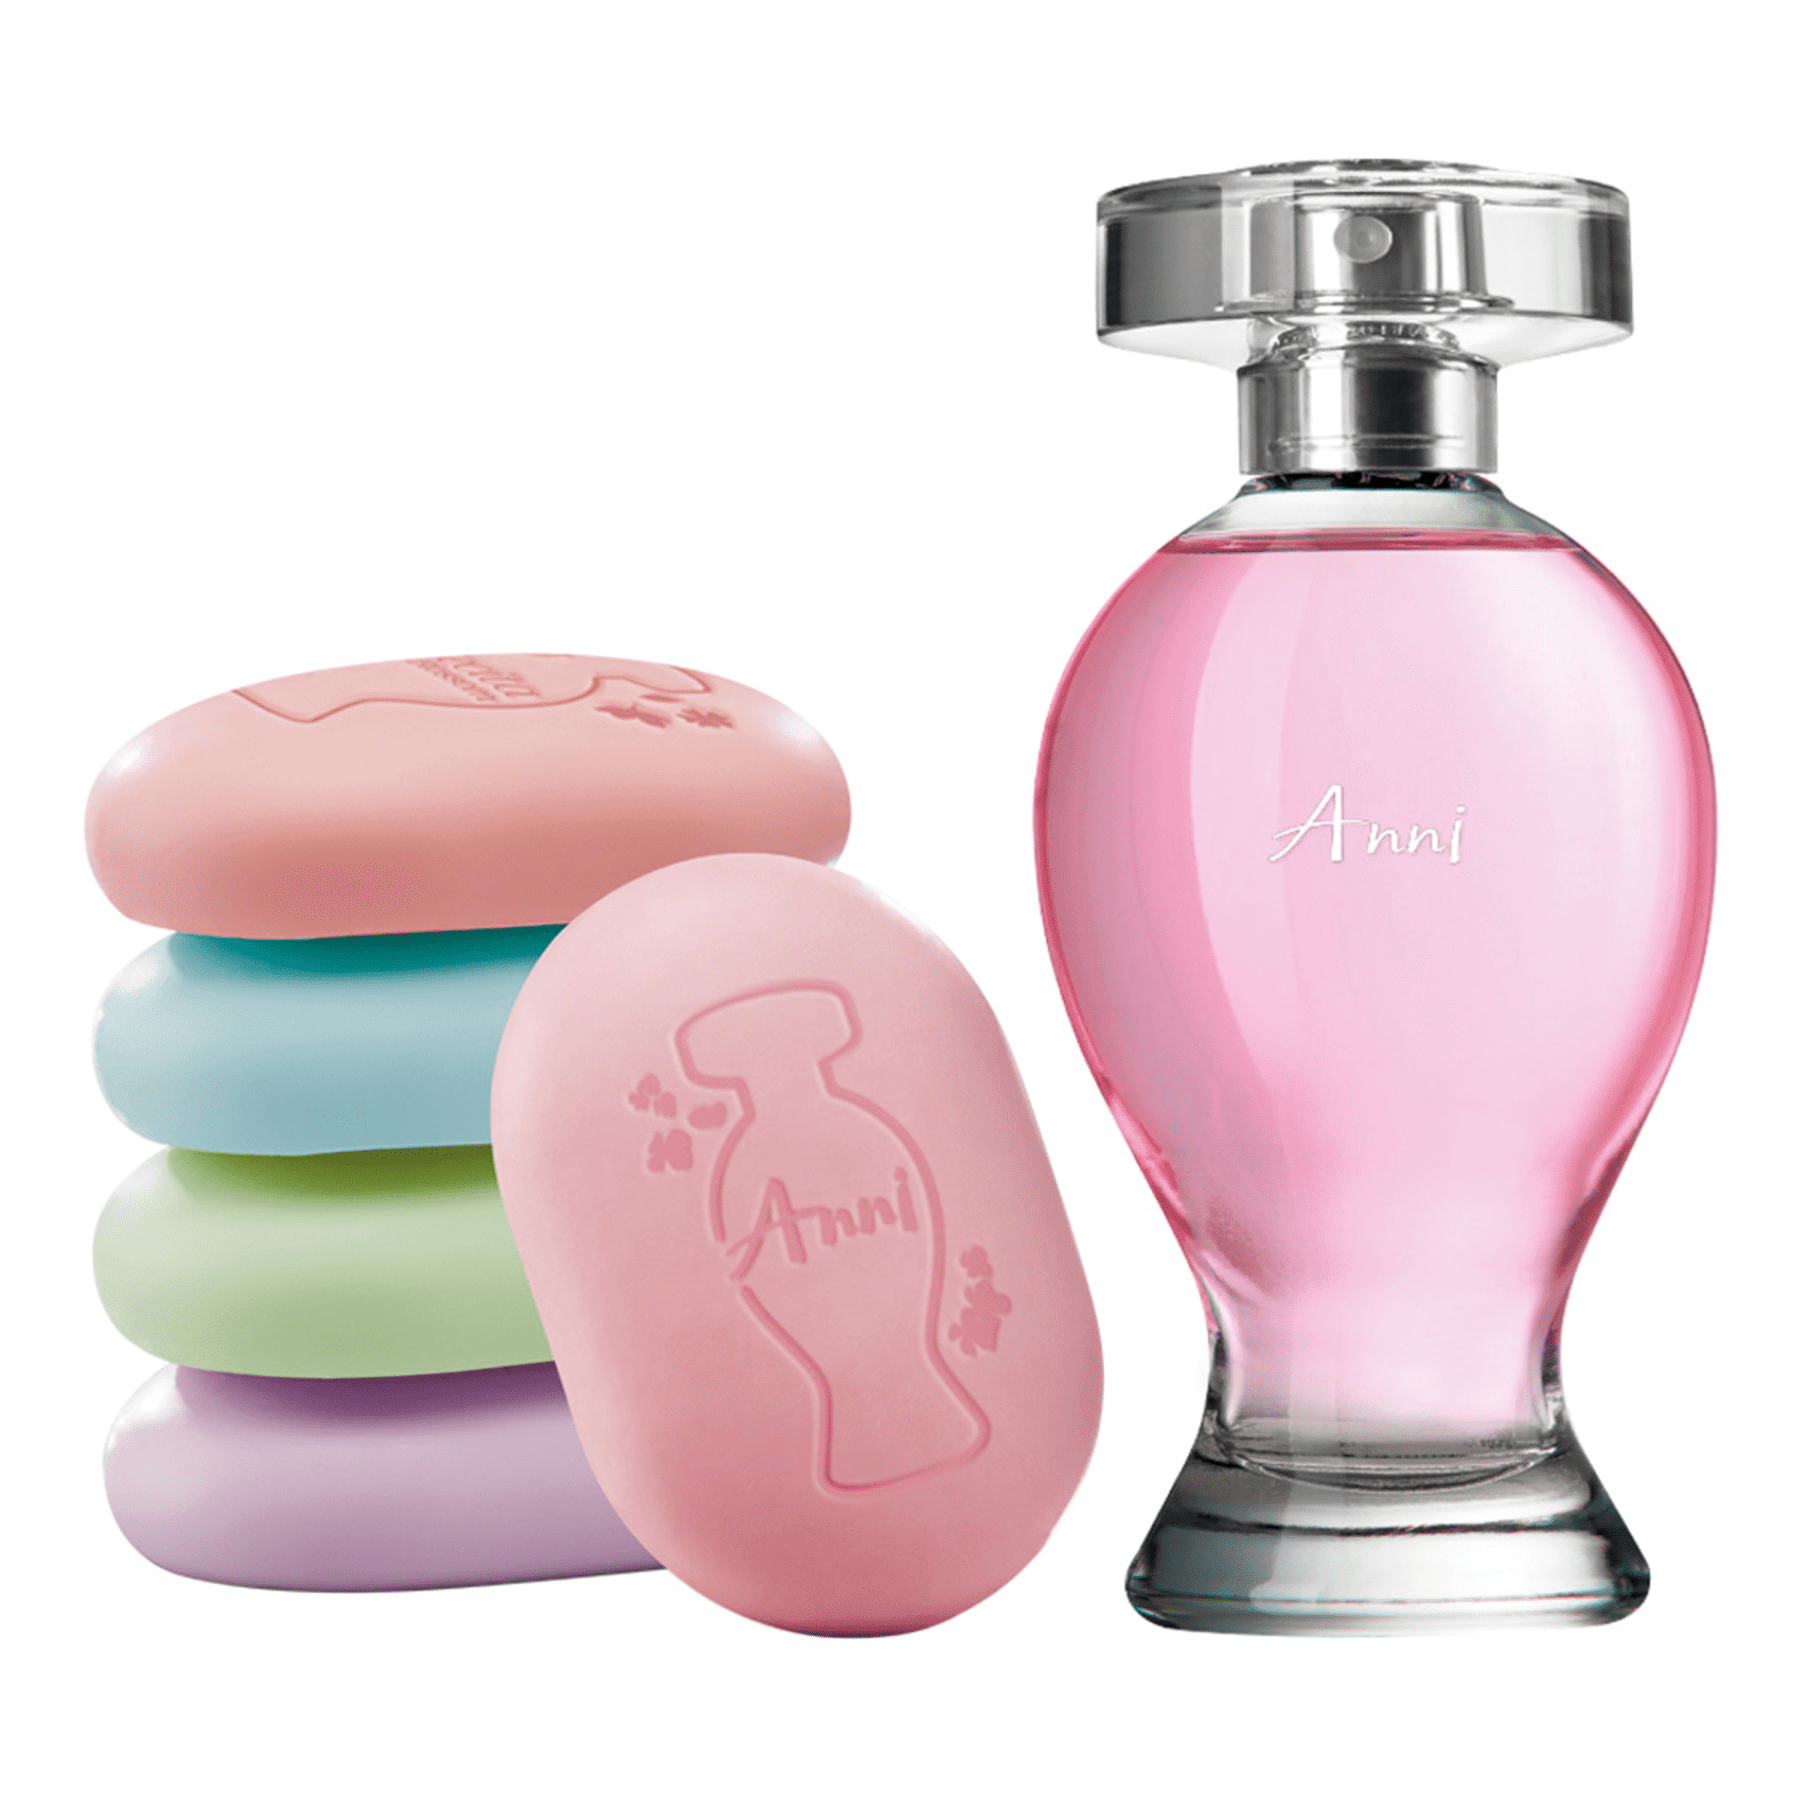 Kit Boticollection: Anni Deodorant Cologne 100 Ml + 5 Perfumed Soaps 80g - o Boticario